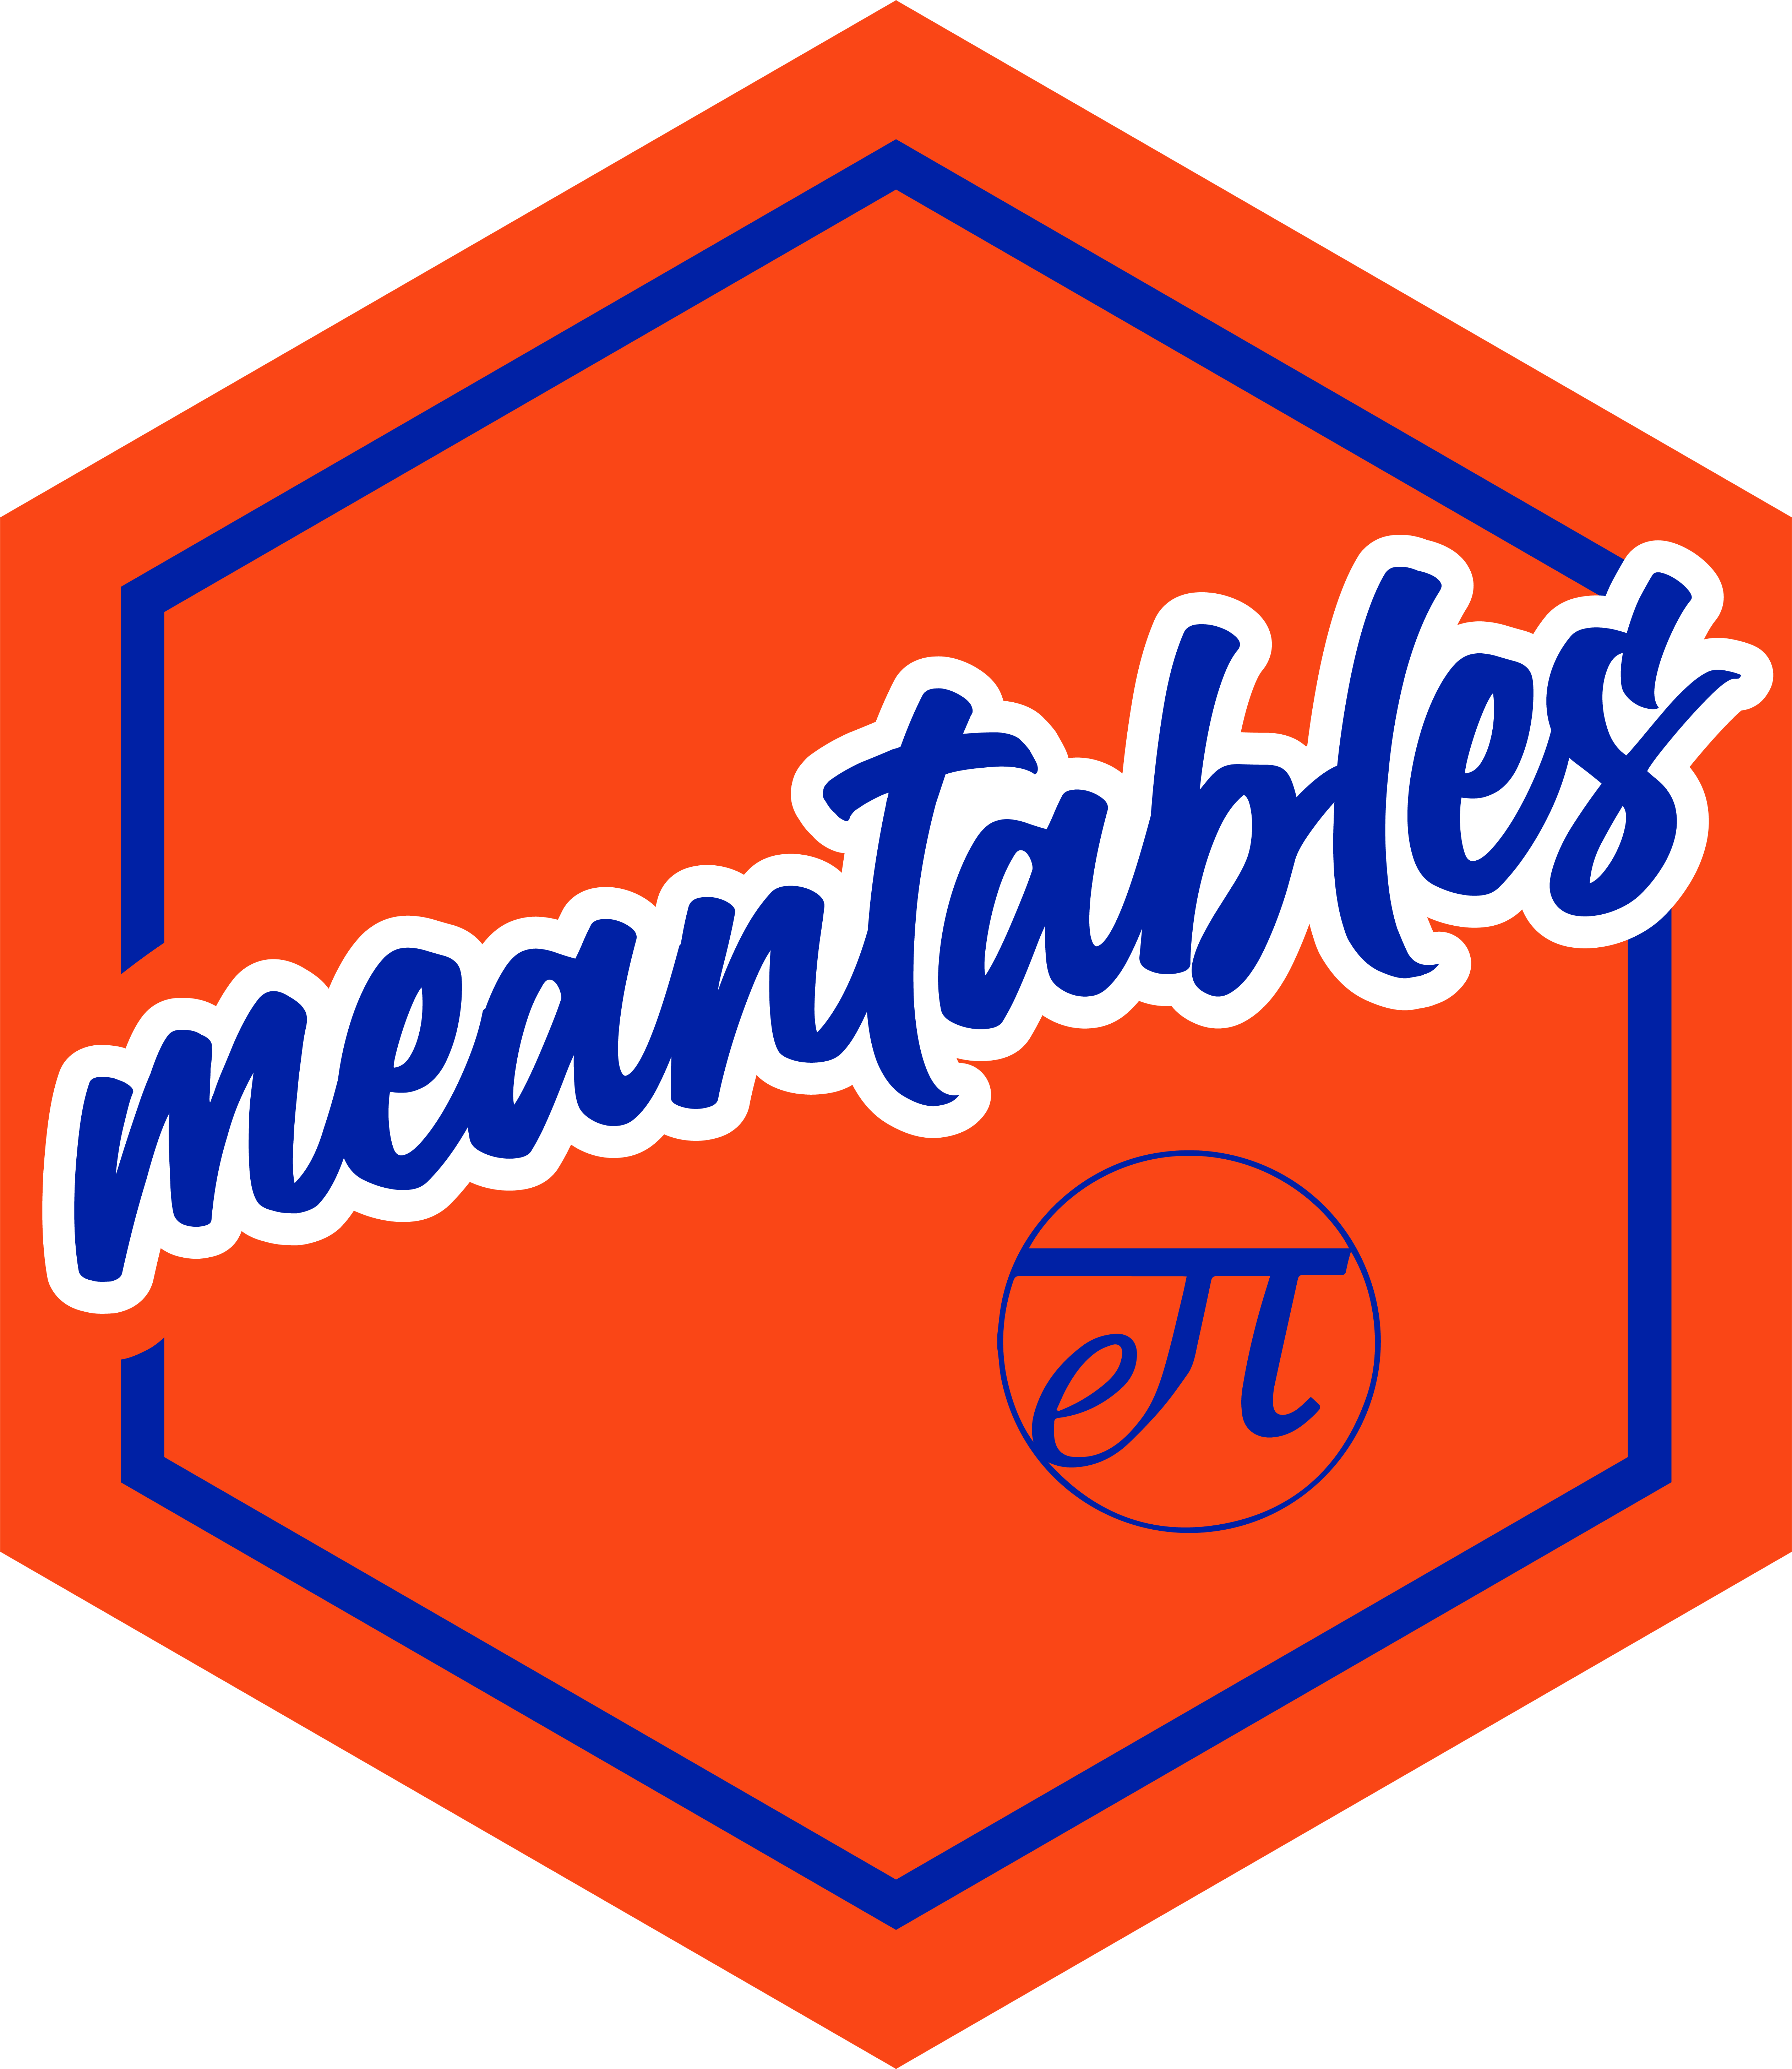 meantables hex logo